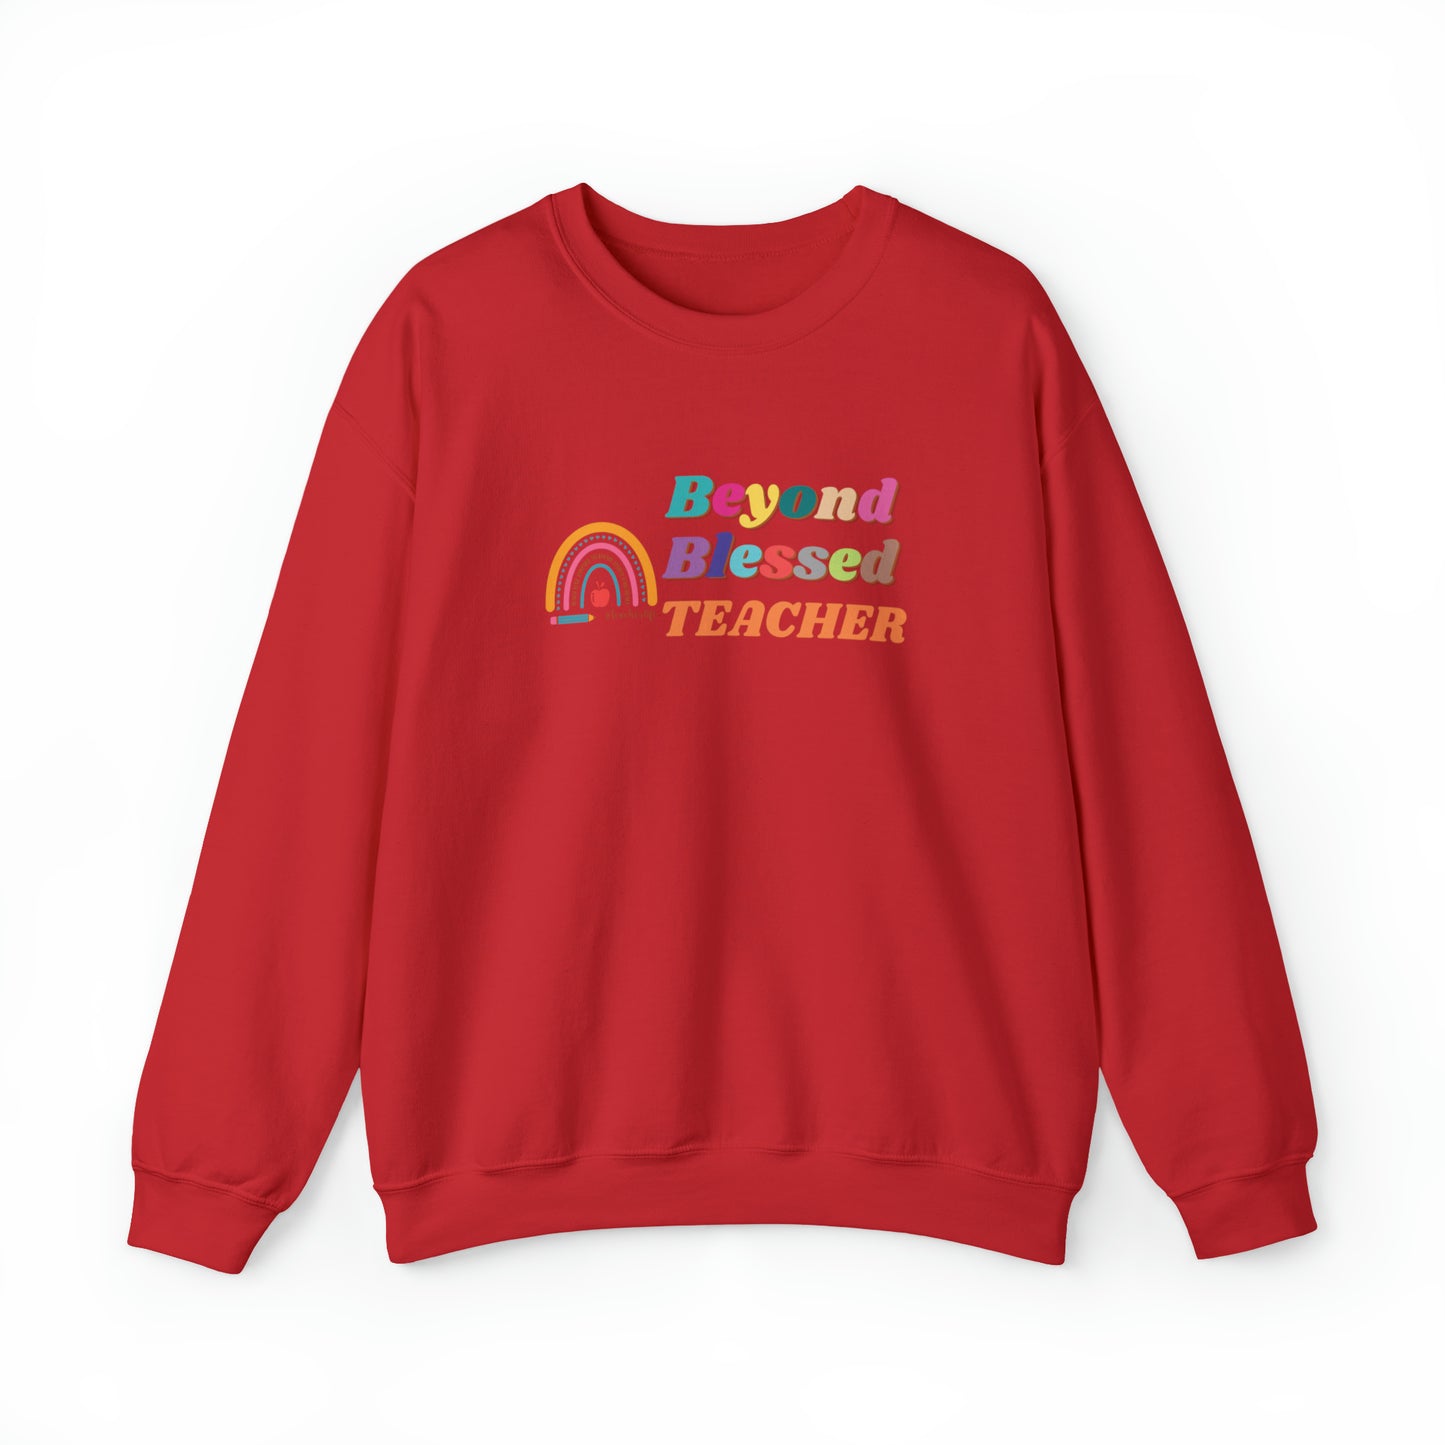 Beyond Blessed Teacher - Crewneck Sweatshirt